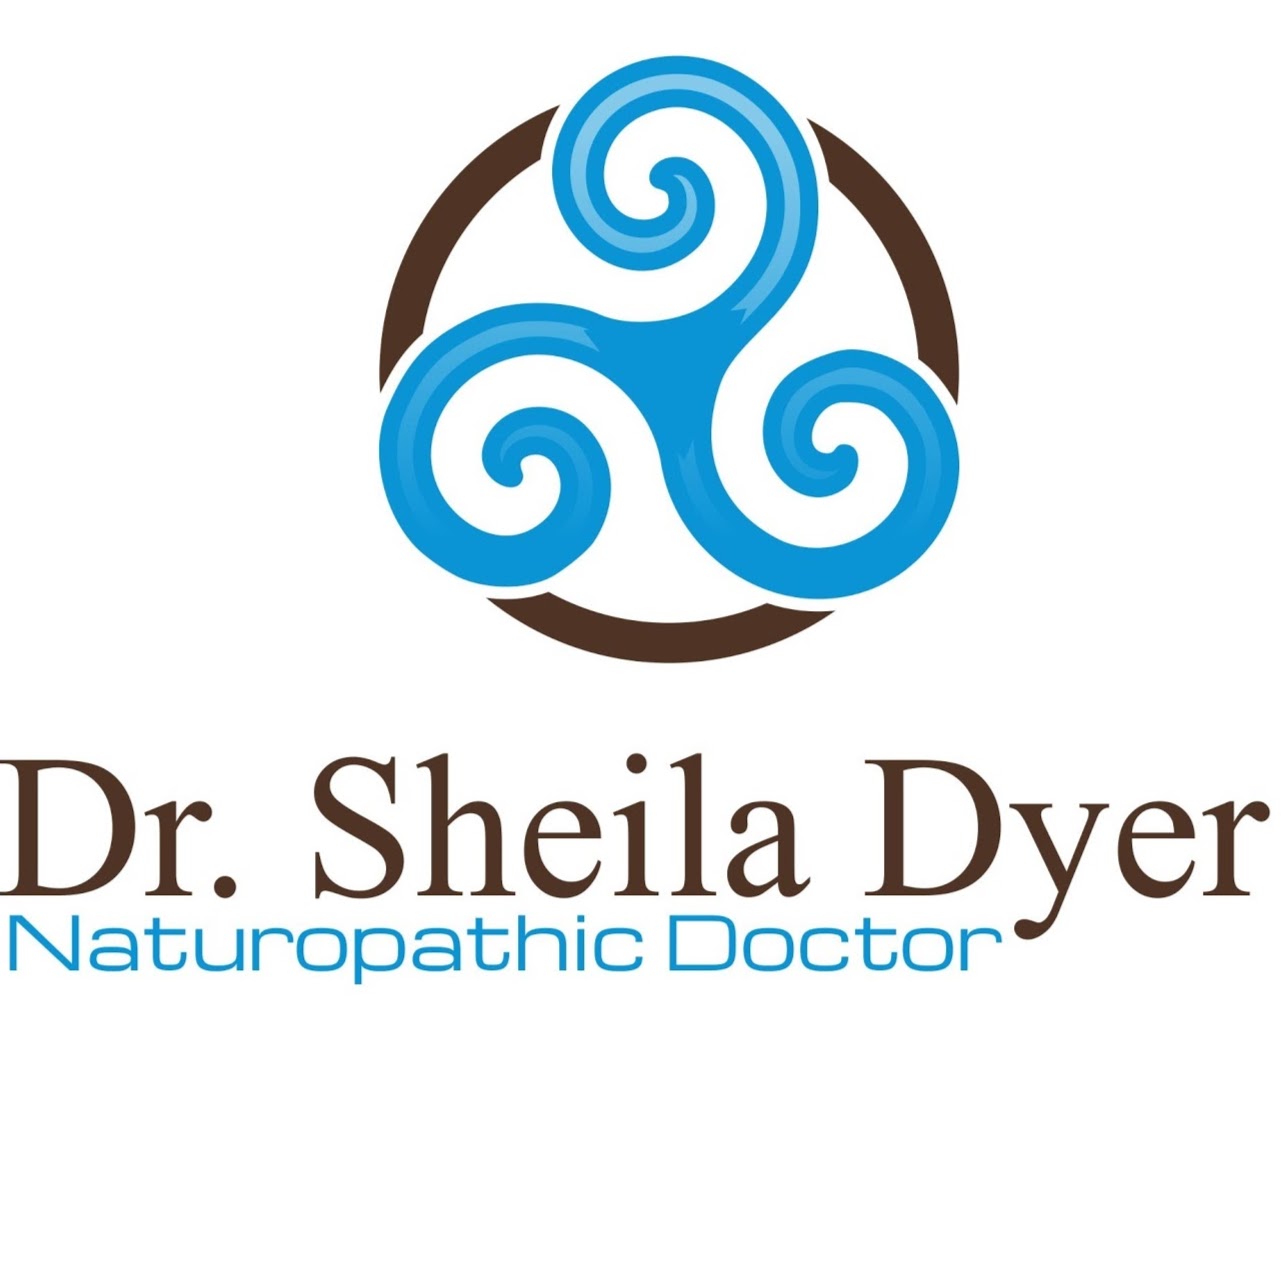 Dr. Sheila Dyer, Naturopat